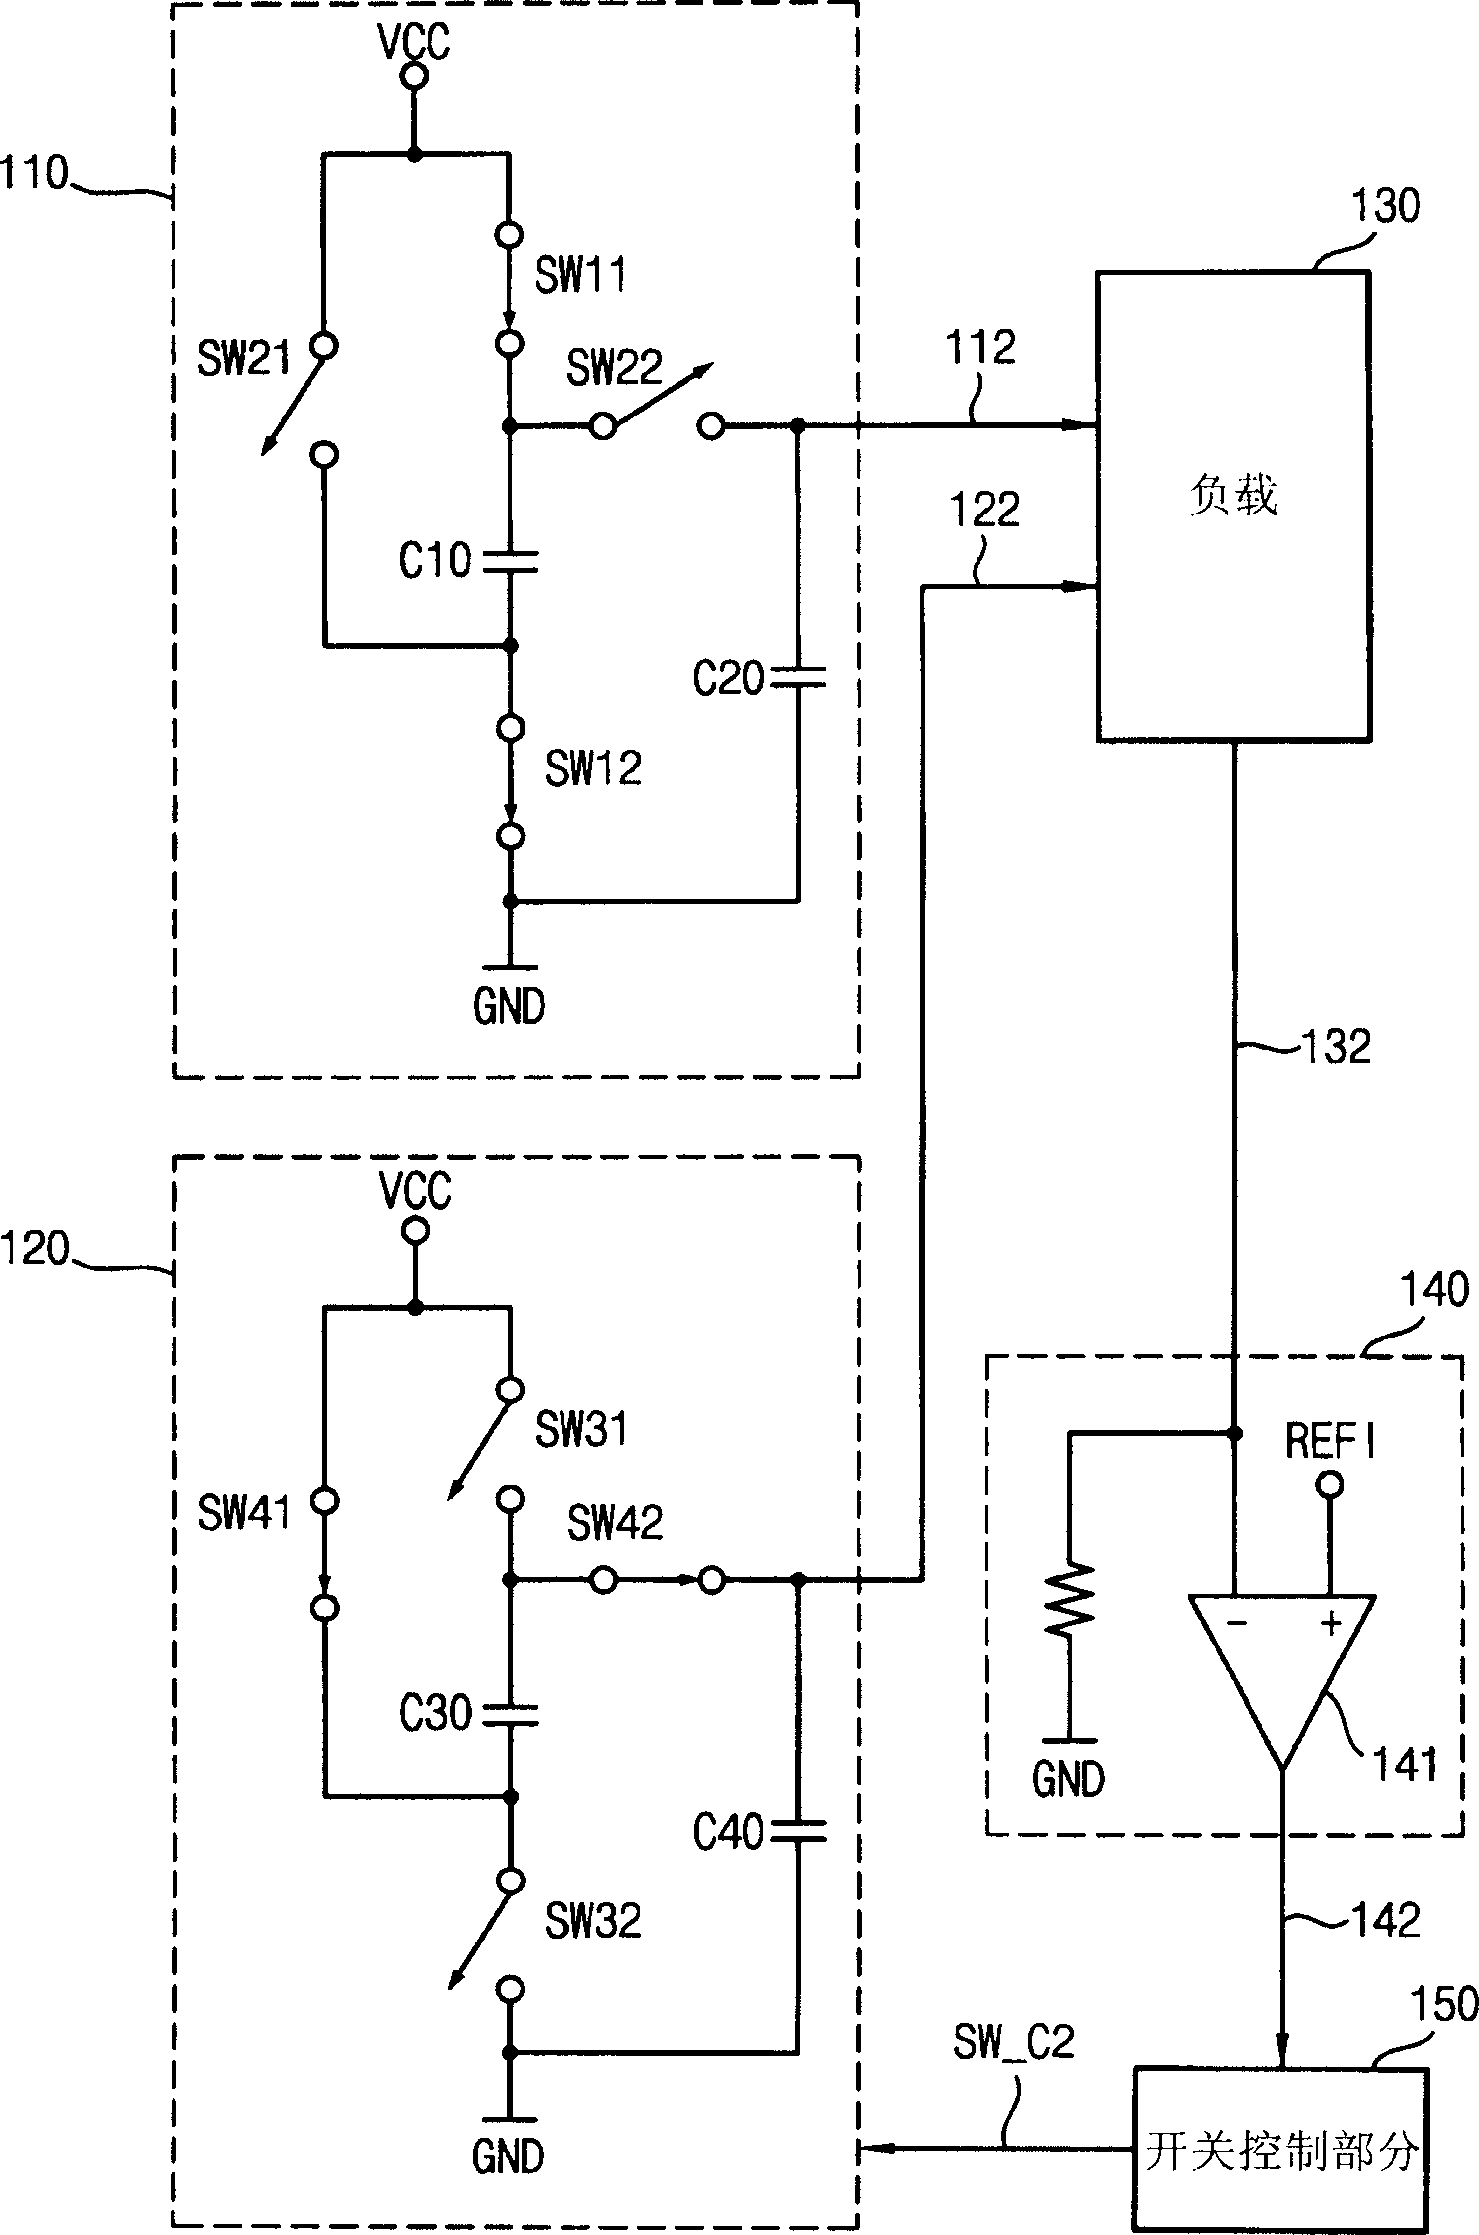 Voltage generator, method of generating voltage, display device having the voltage generator and apparatus for driving the display device